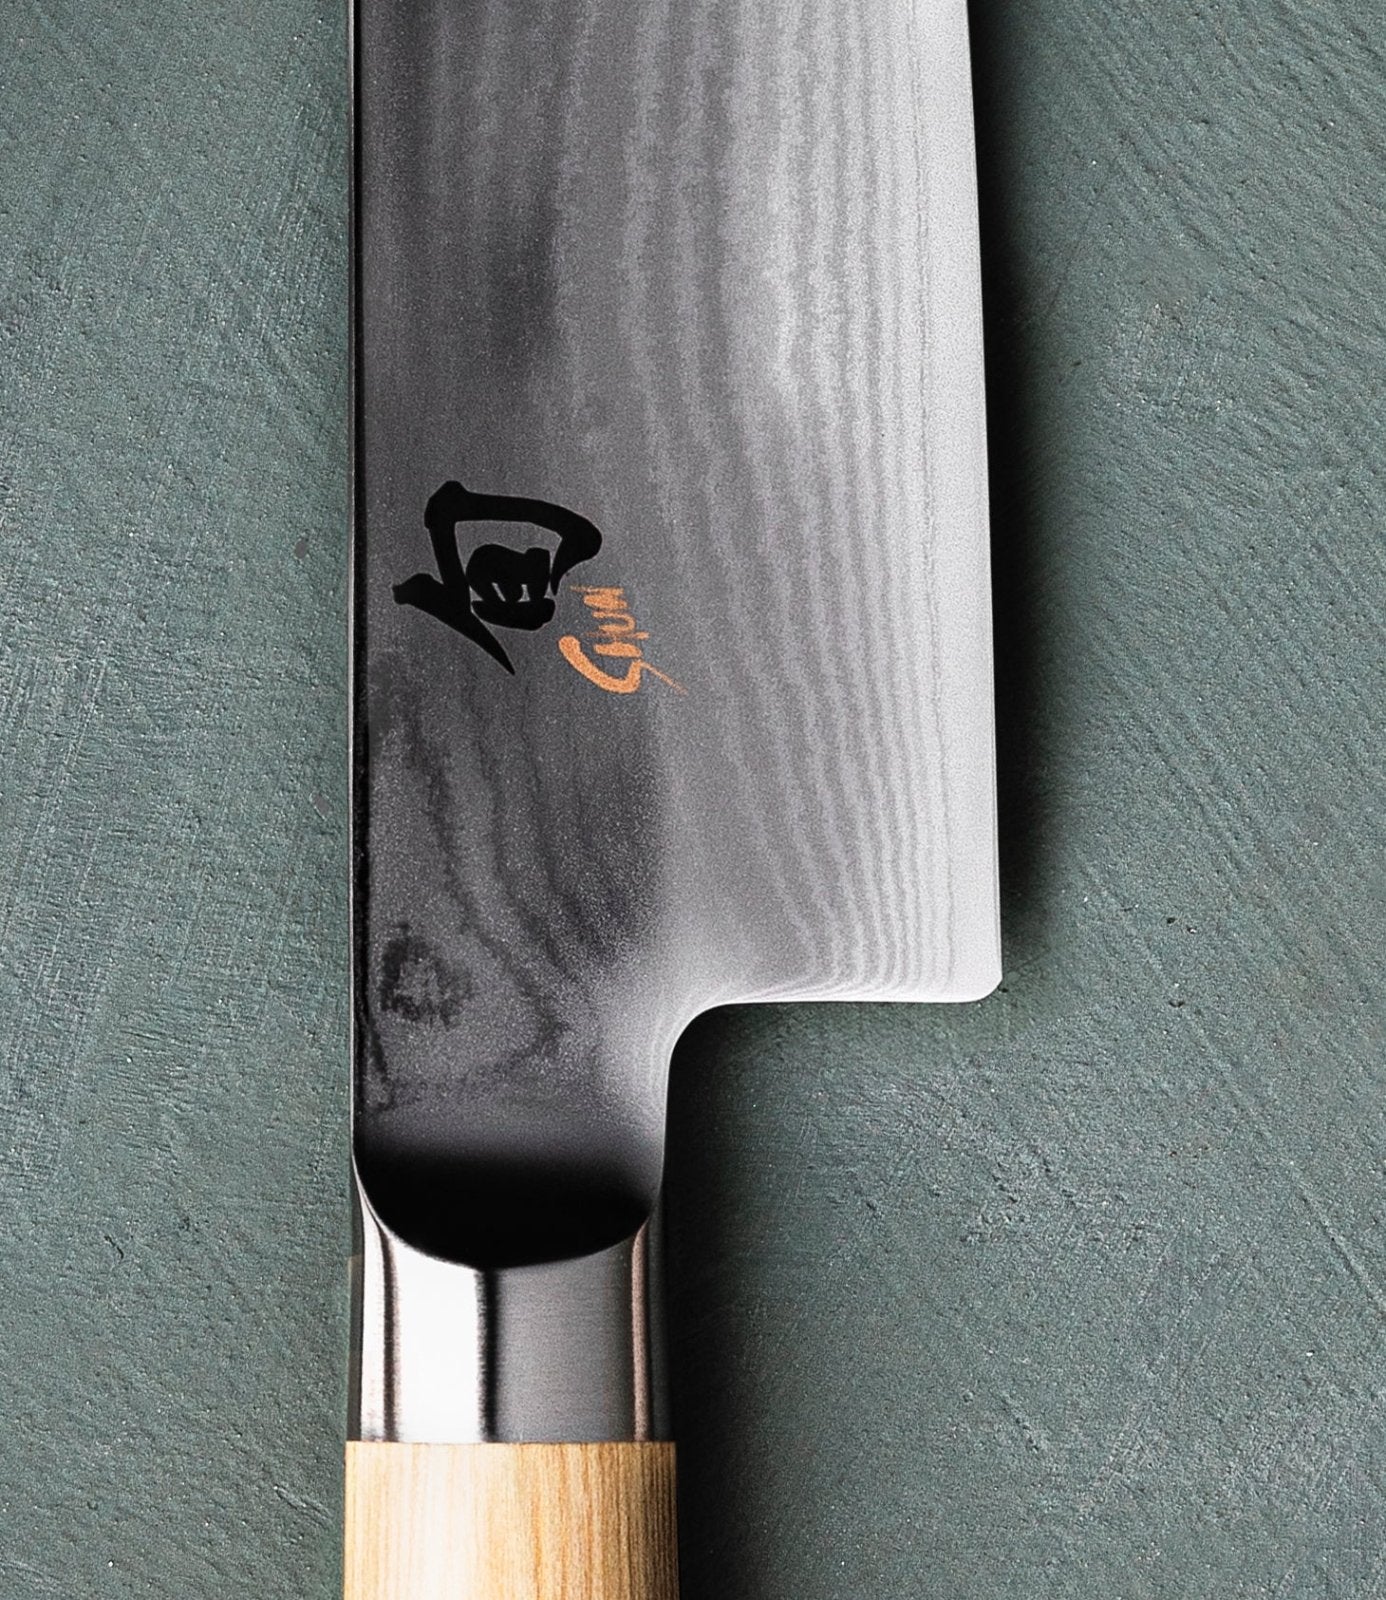 KAI Shun White 23cm Slicing Knife - KAI-DM-0704W - The Cotswold Knife Company